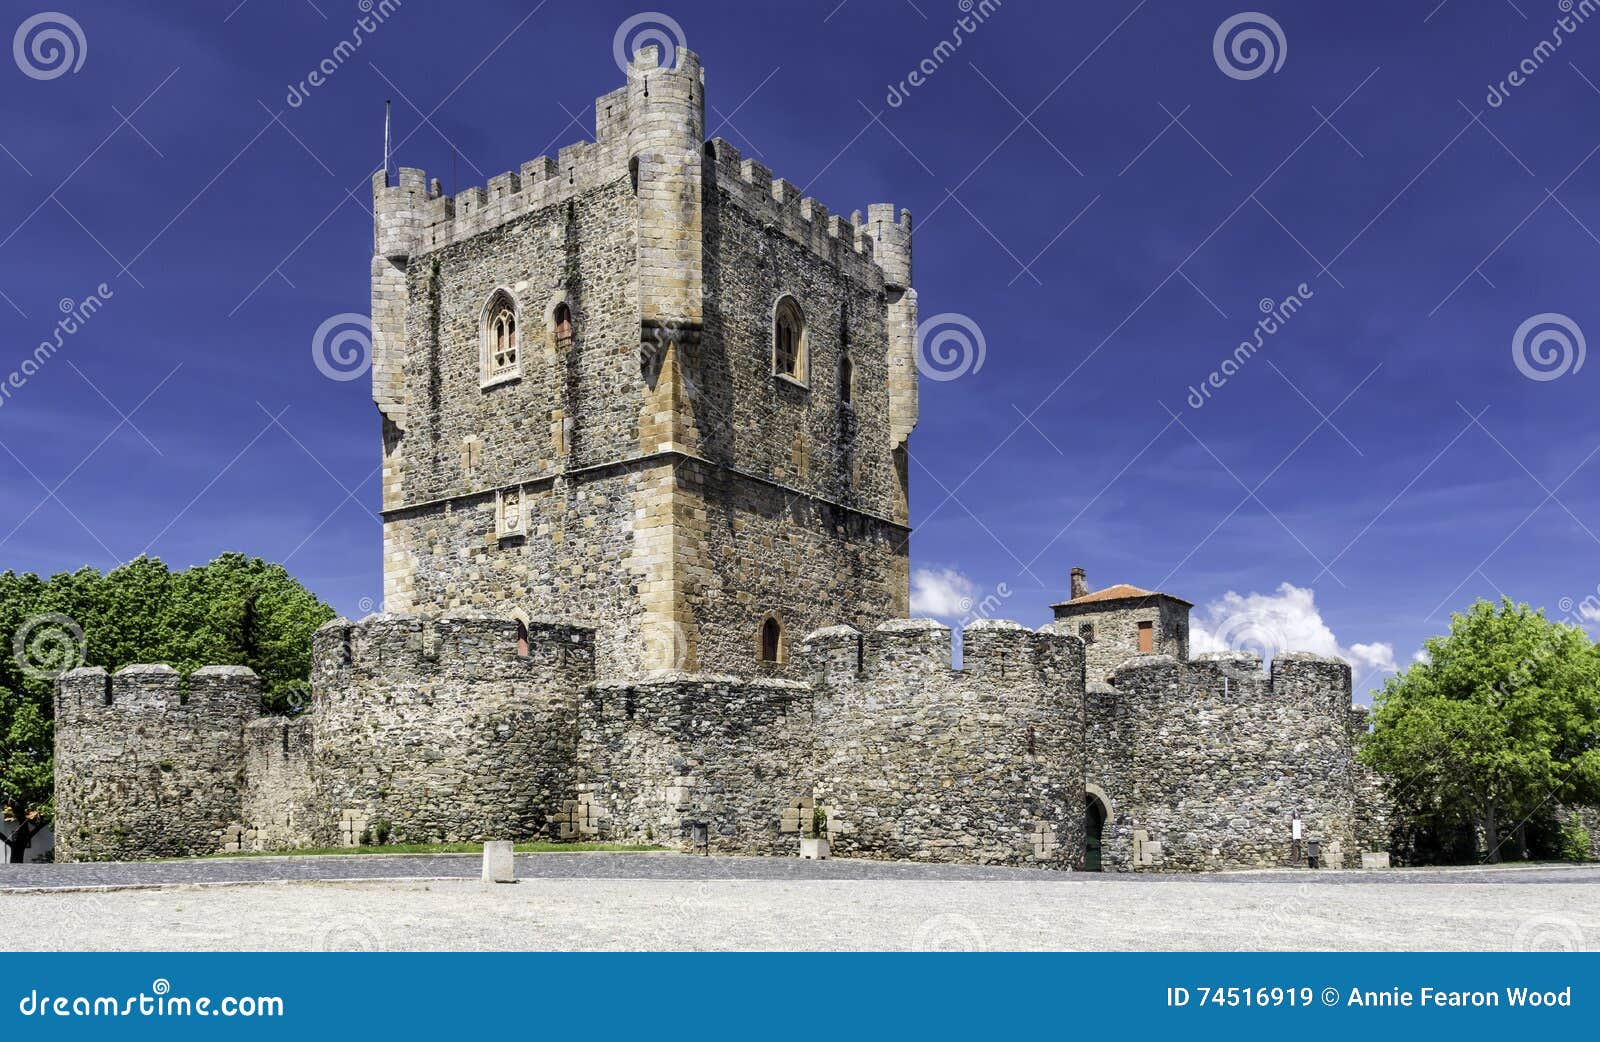 the citadel, braganca, portugal